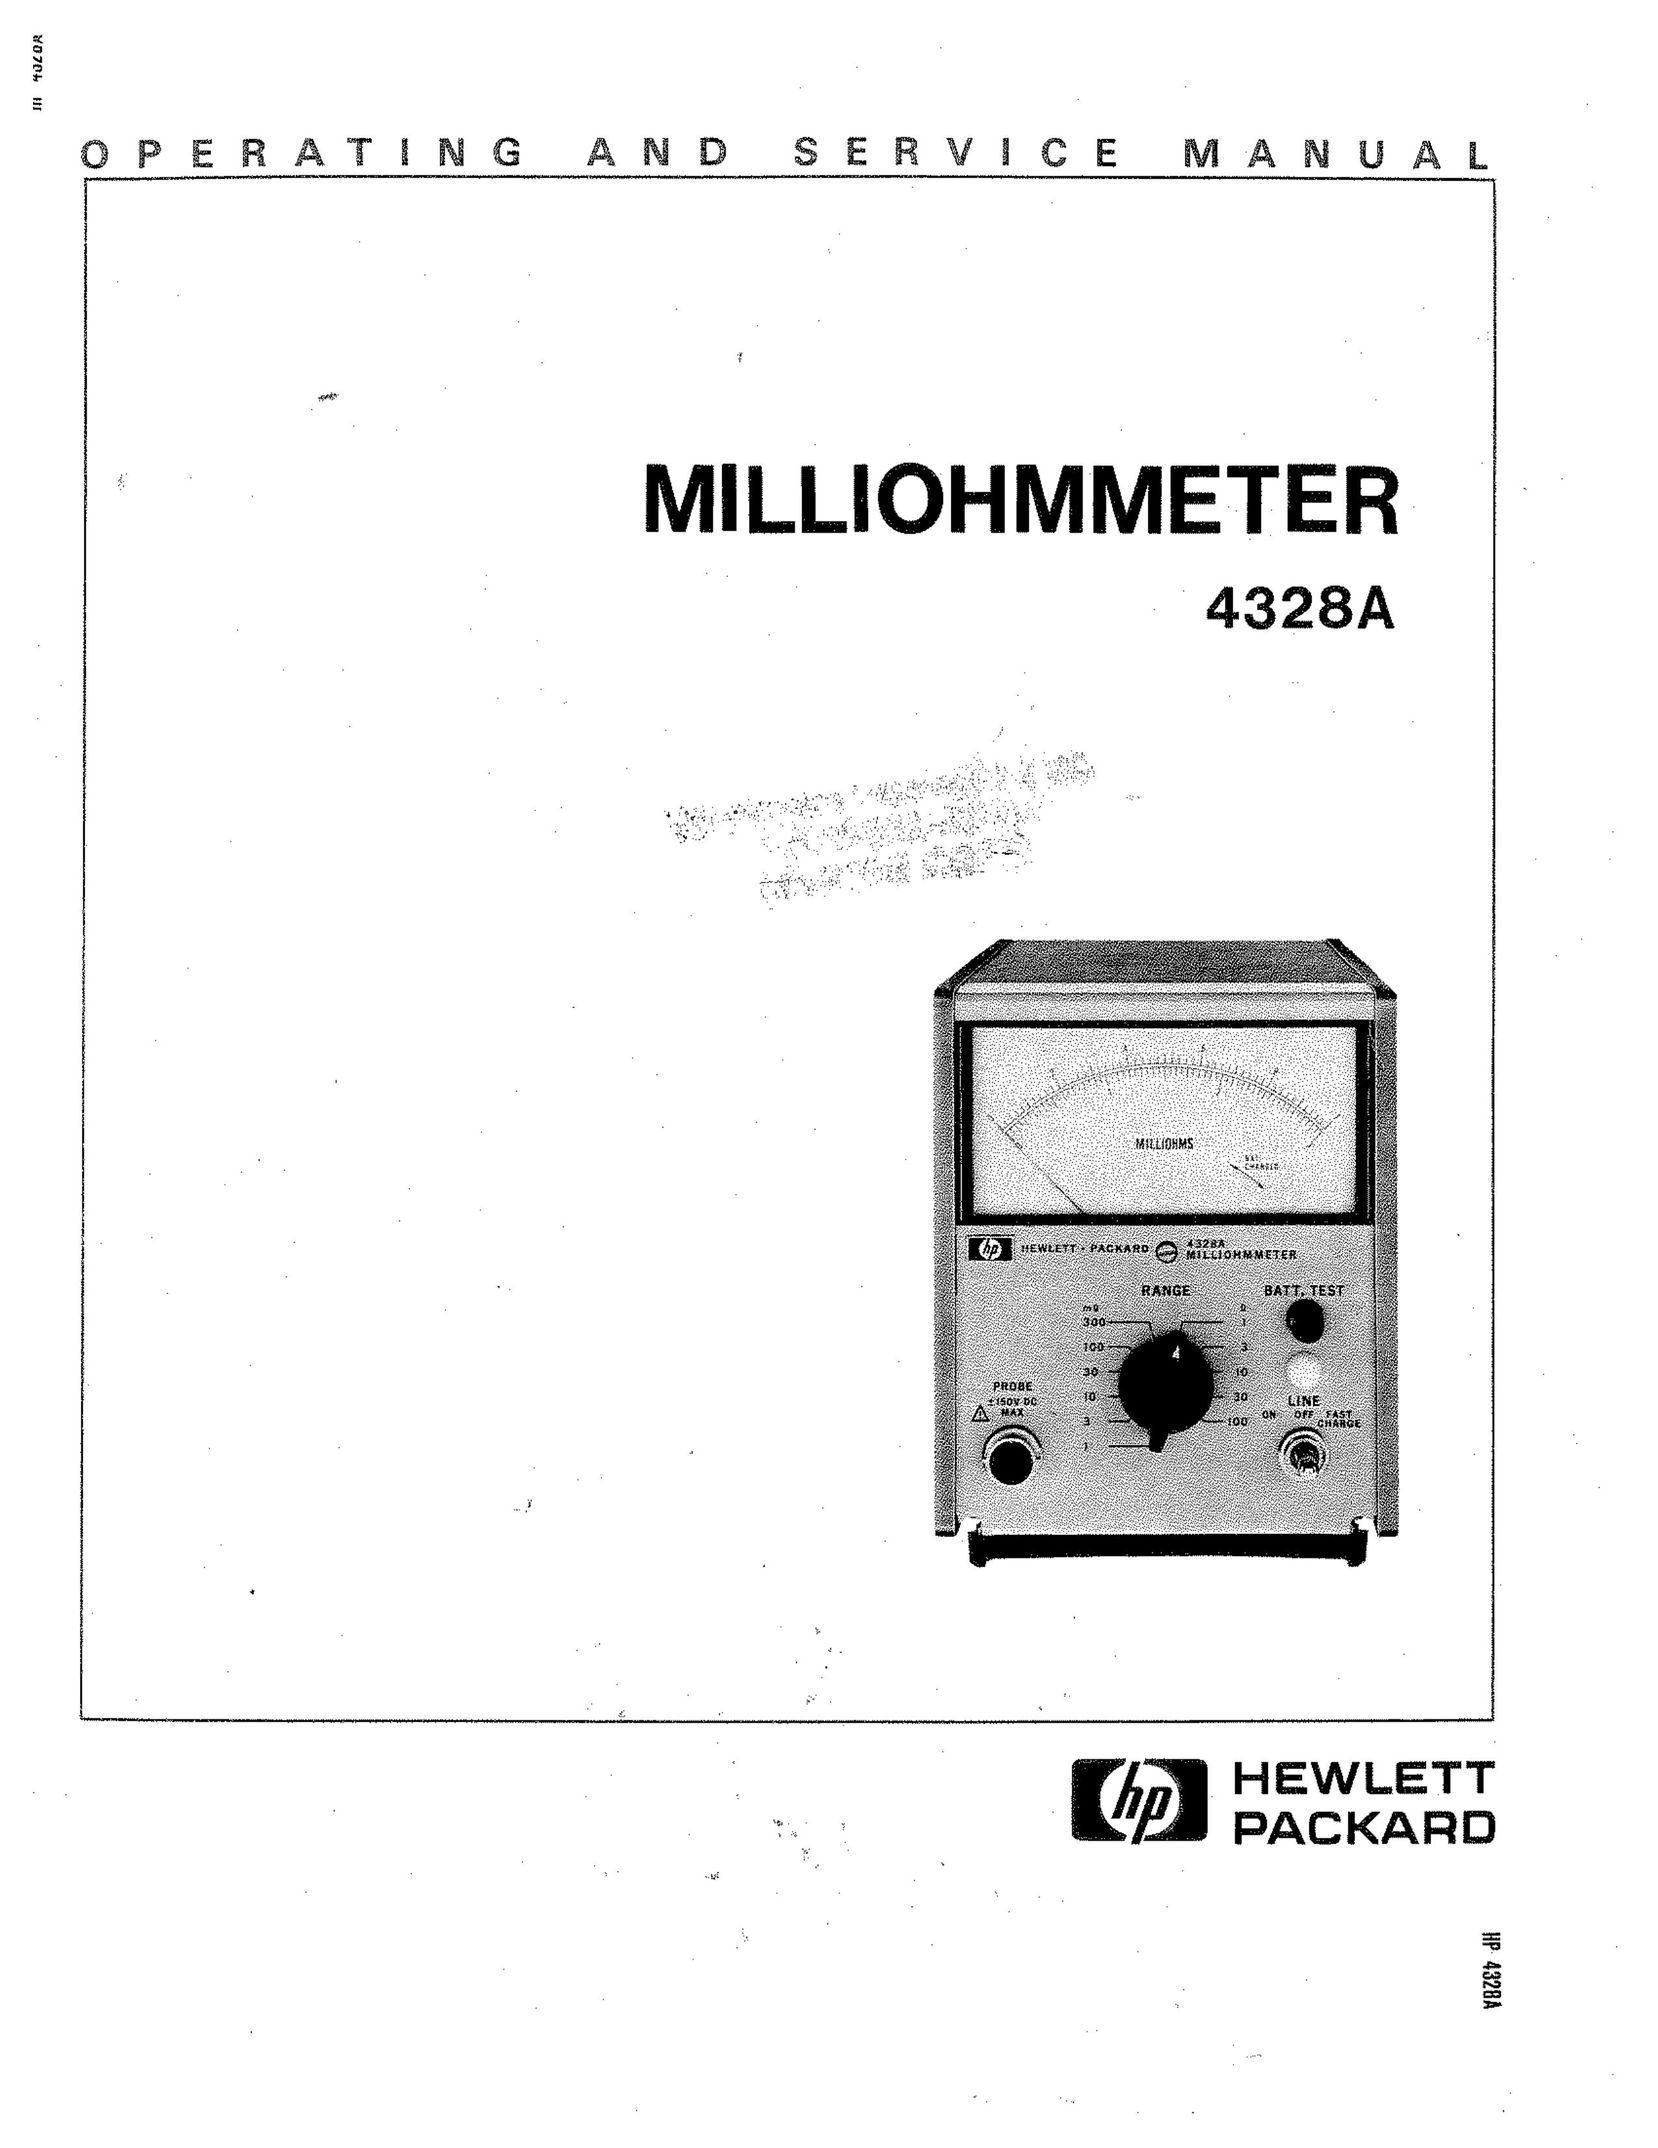 HP (Hewlett-Packard) 4328A Treadmill User Manual